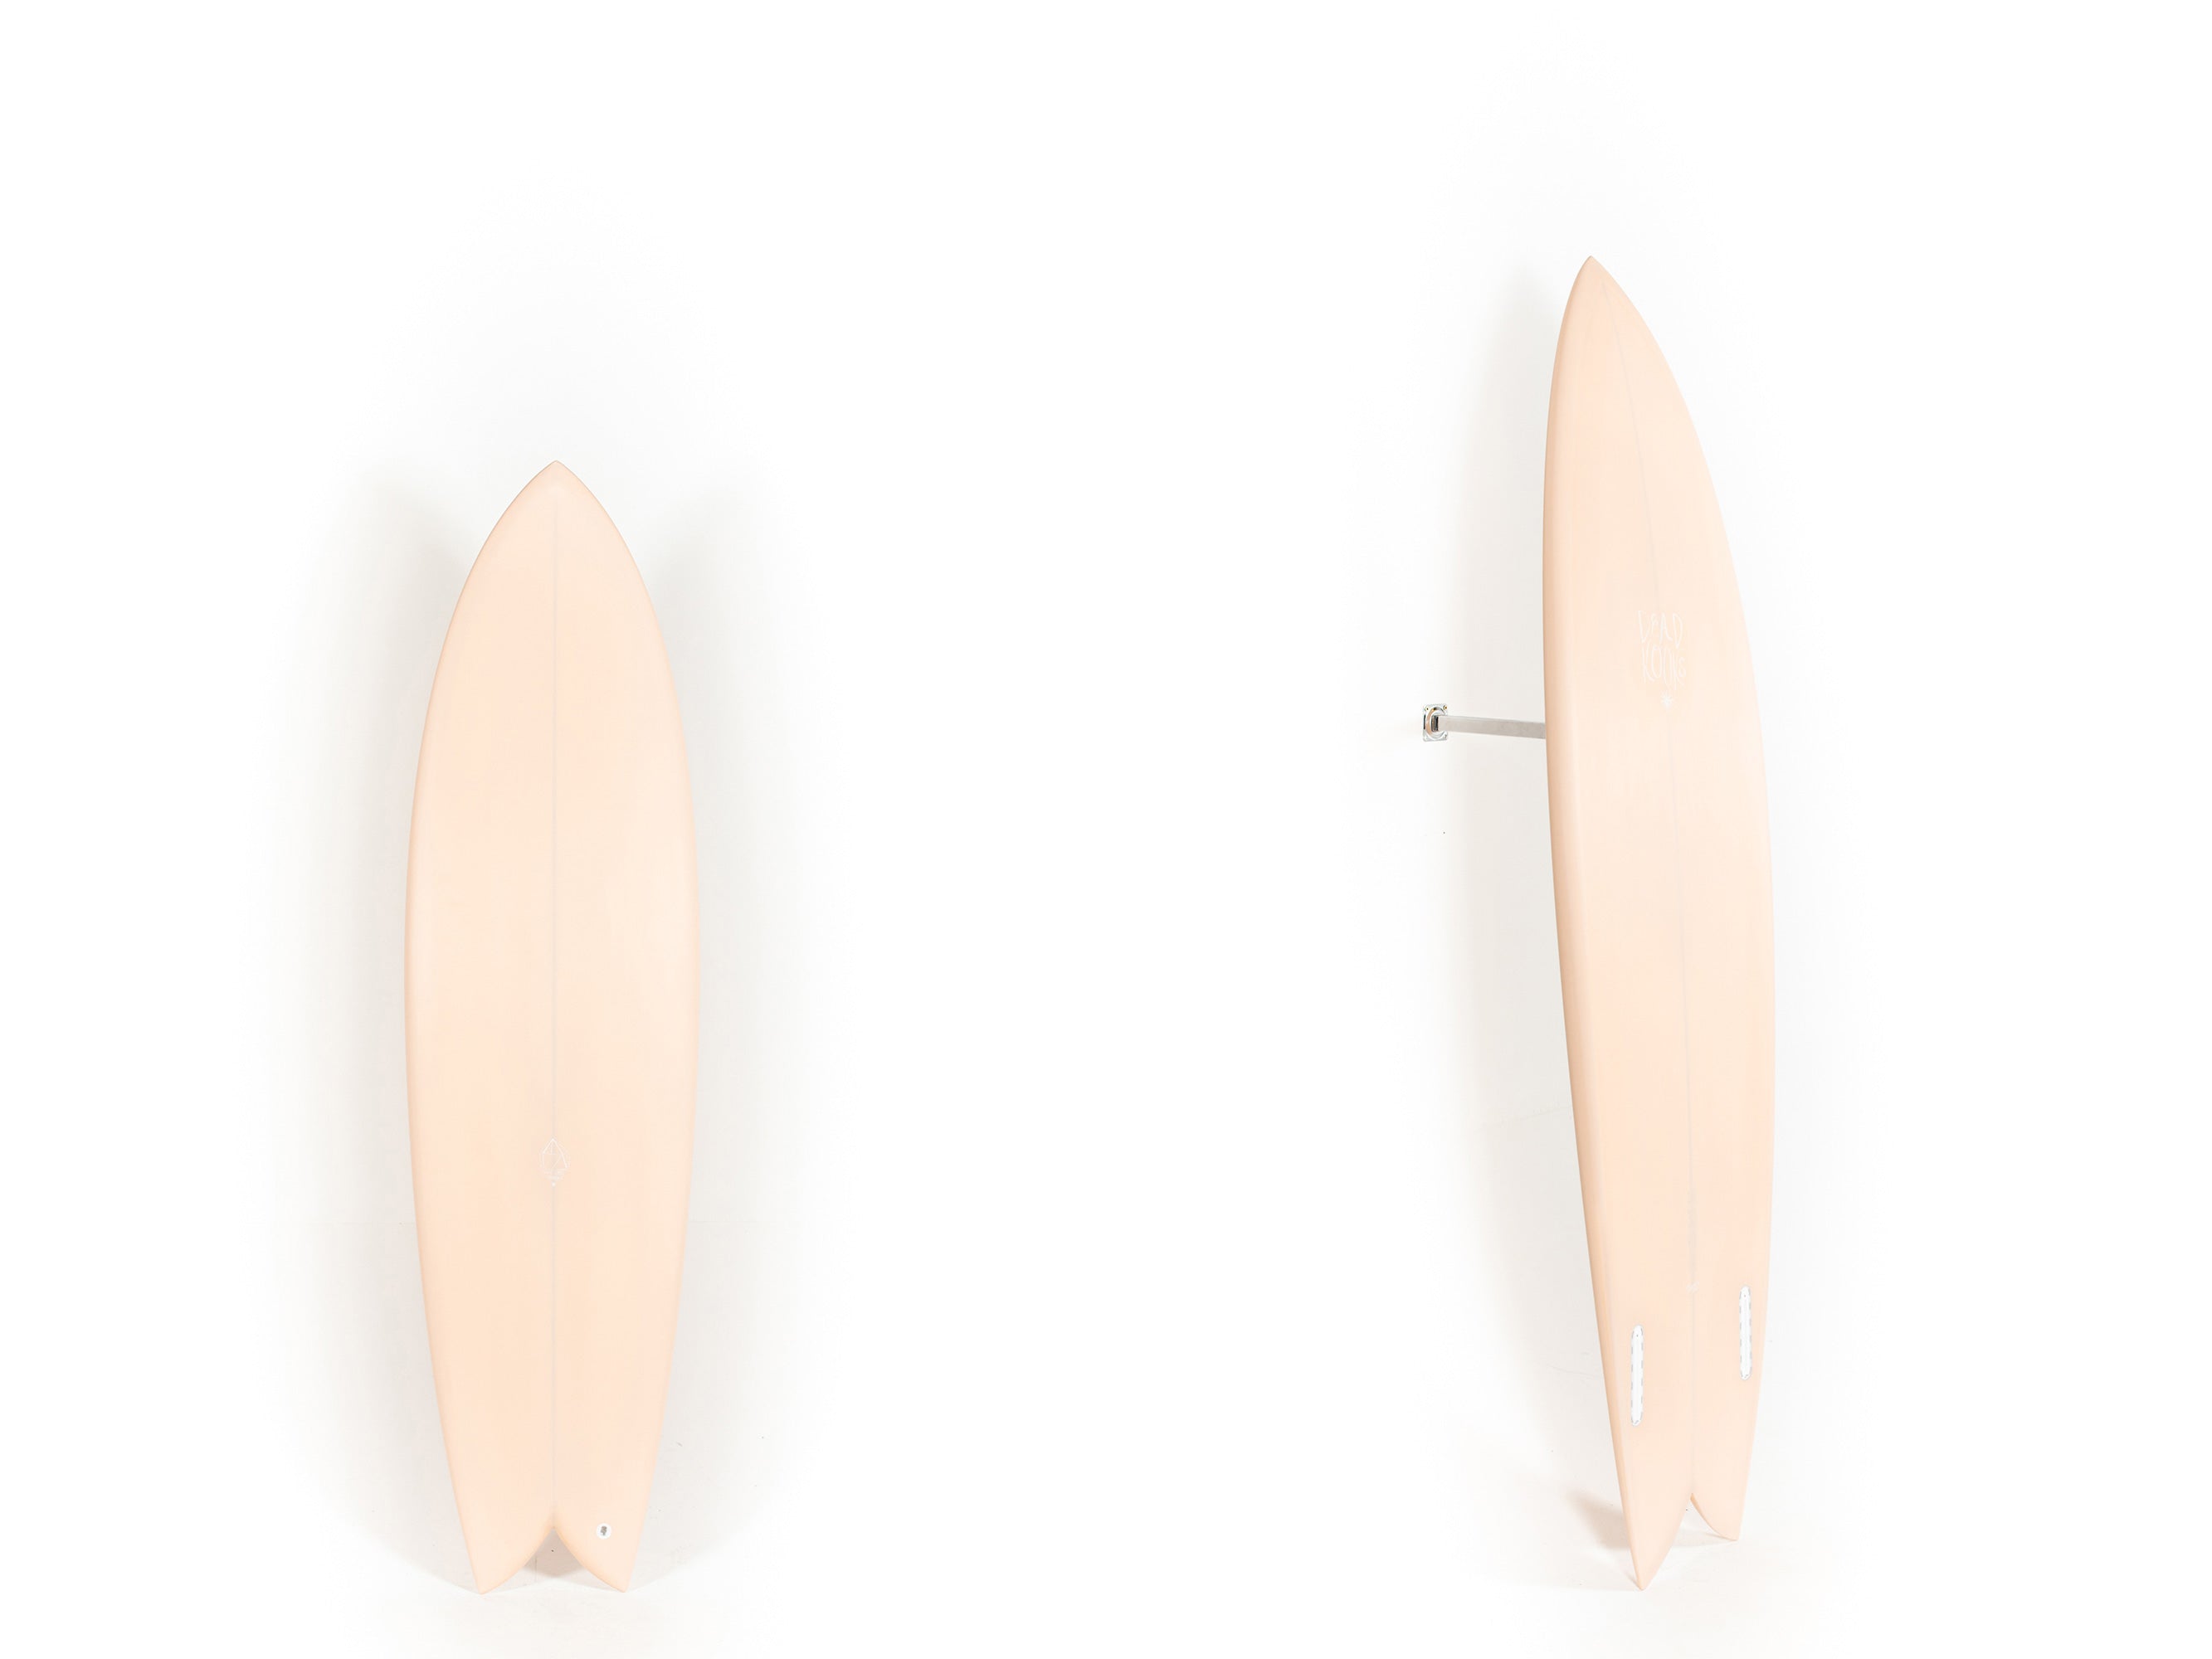 Pukas Surf Shop - Dead Kooks Surfboards